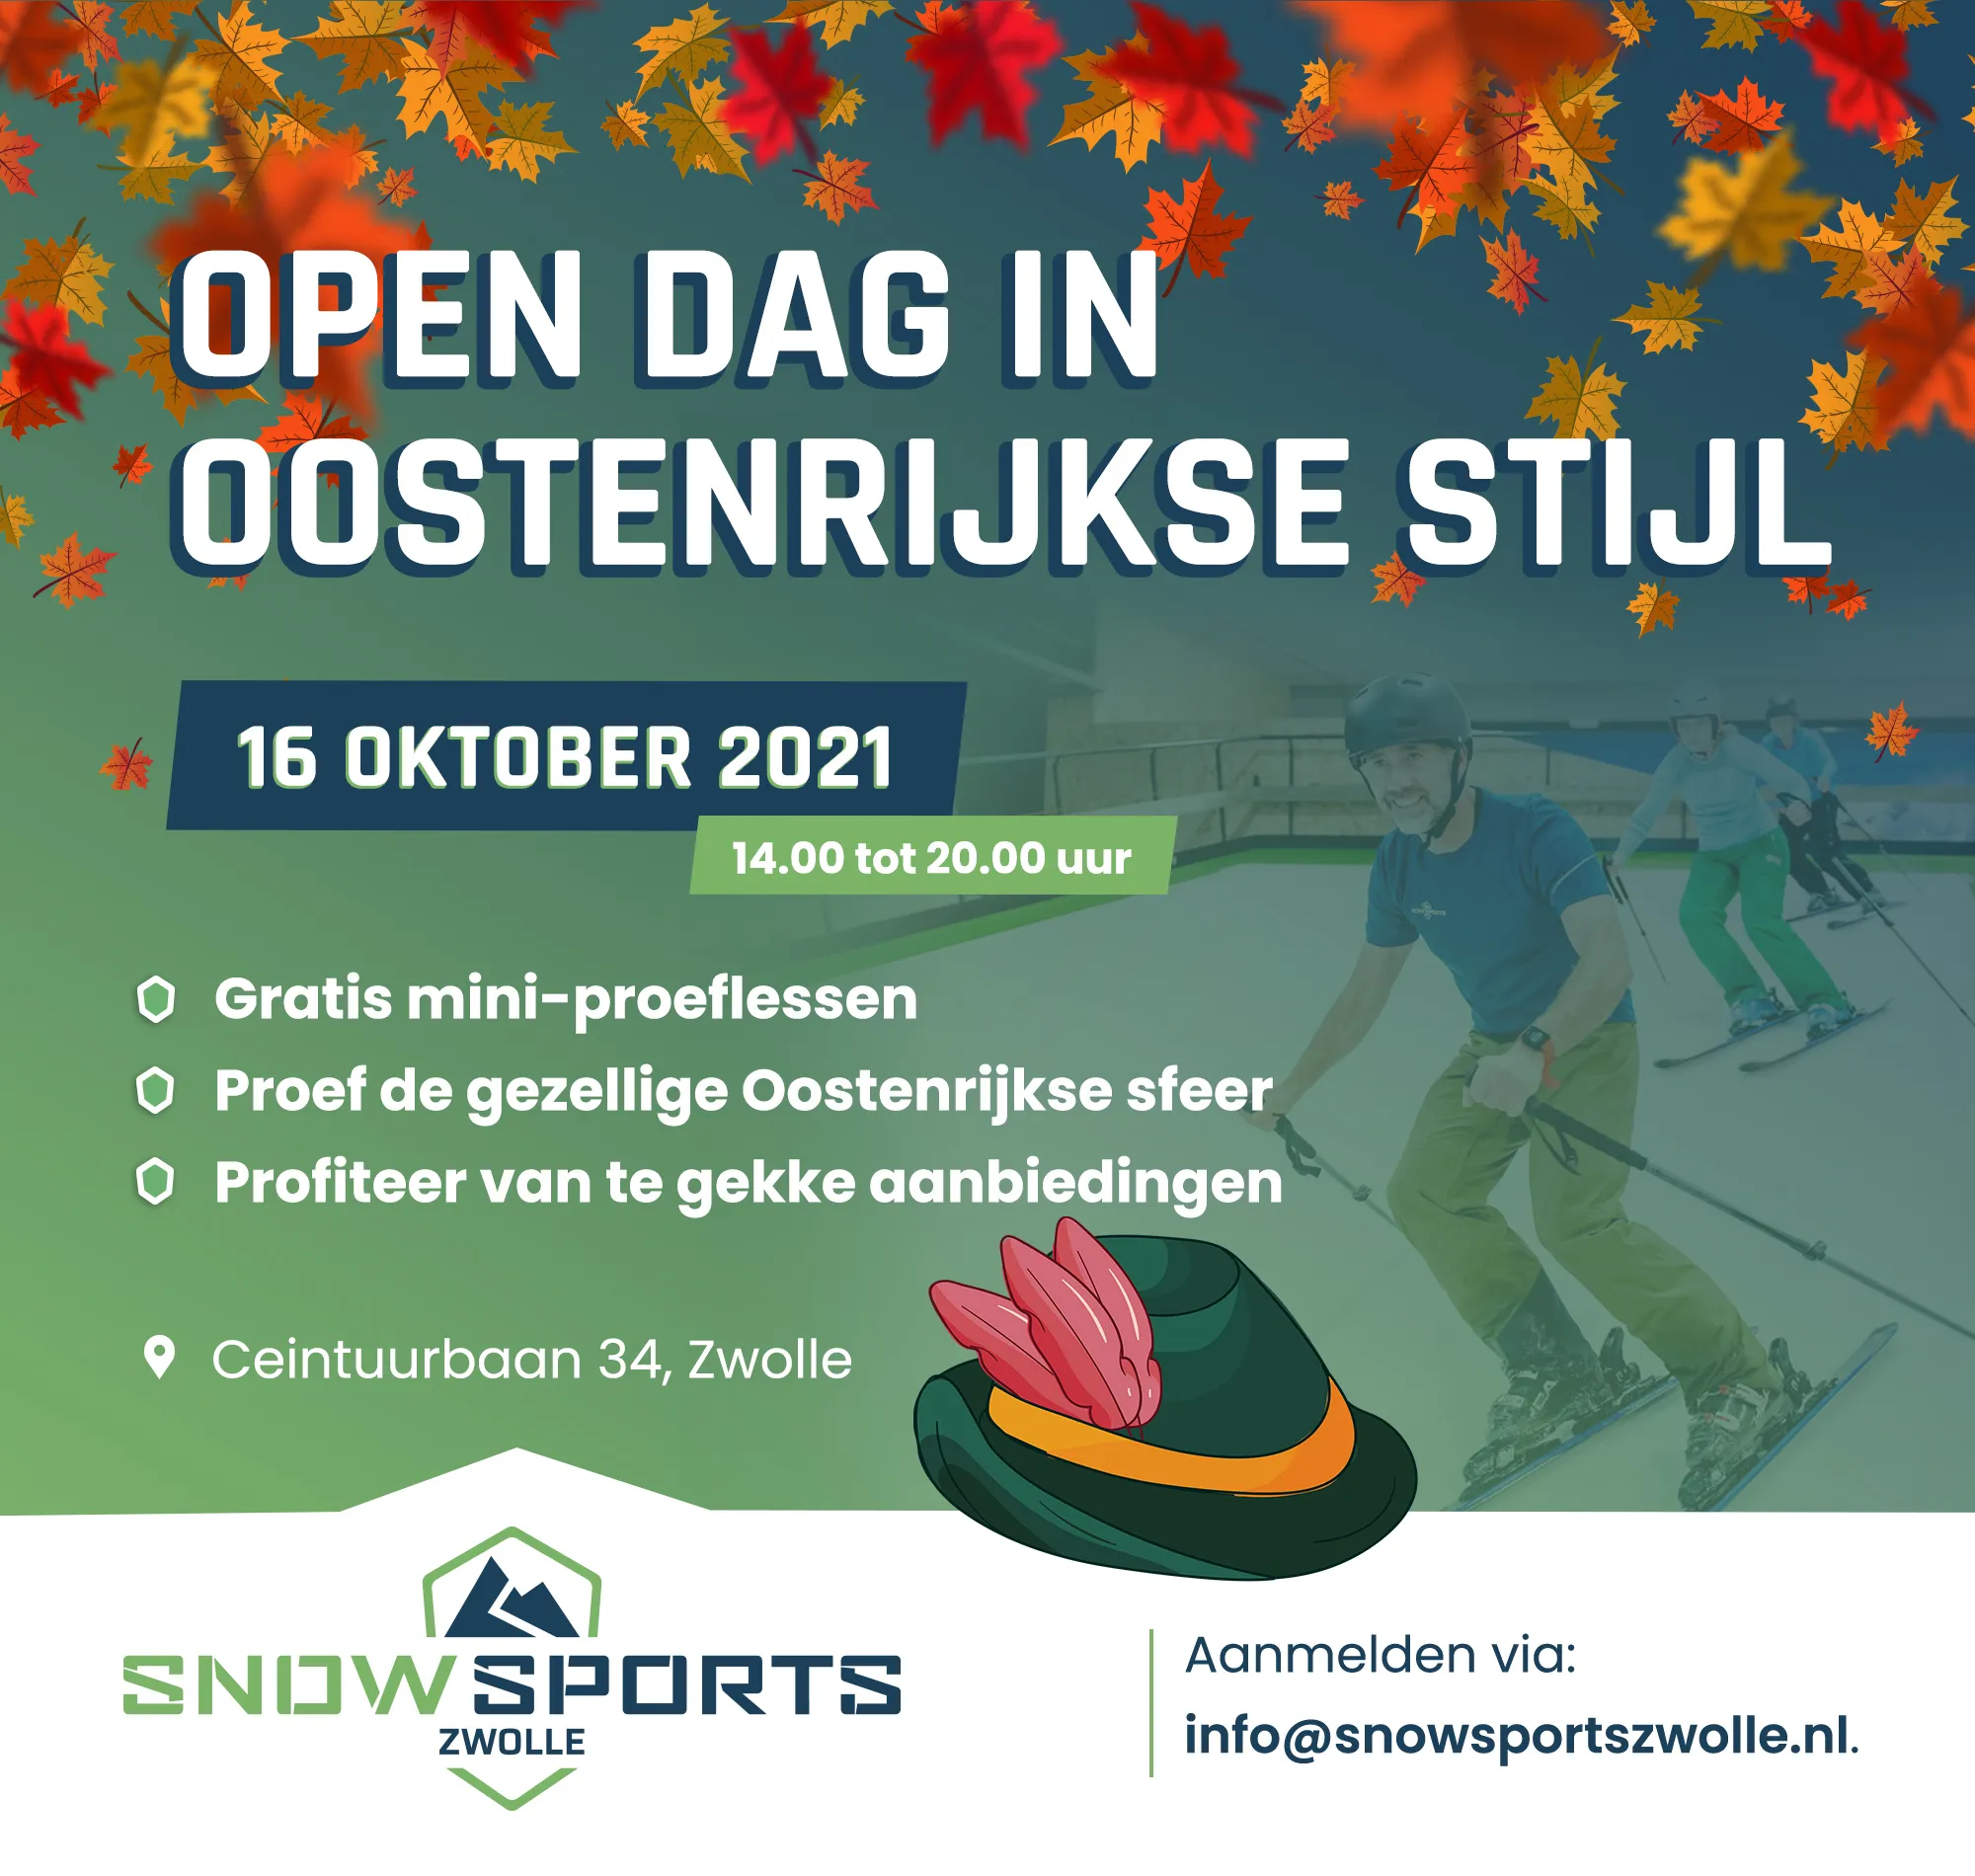 uitnodiging opendag snowsports 2021 oostenrijkse stijl